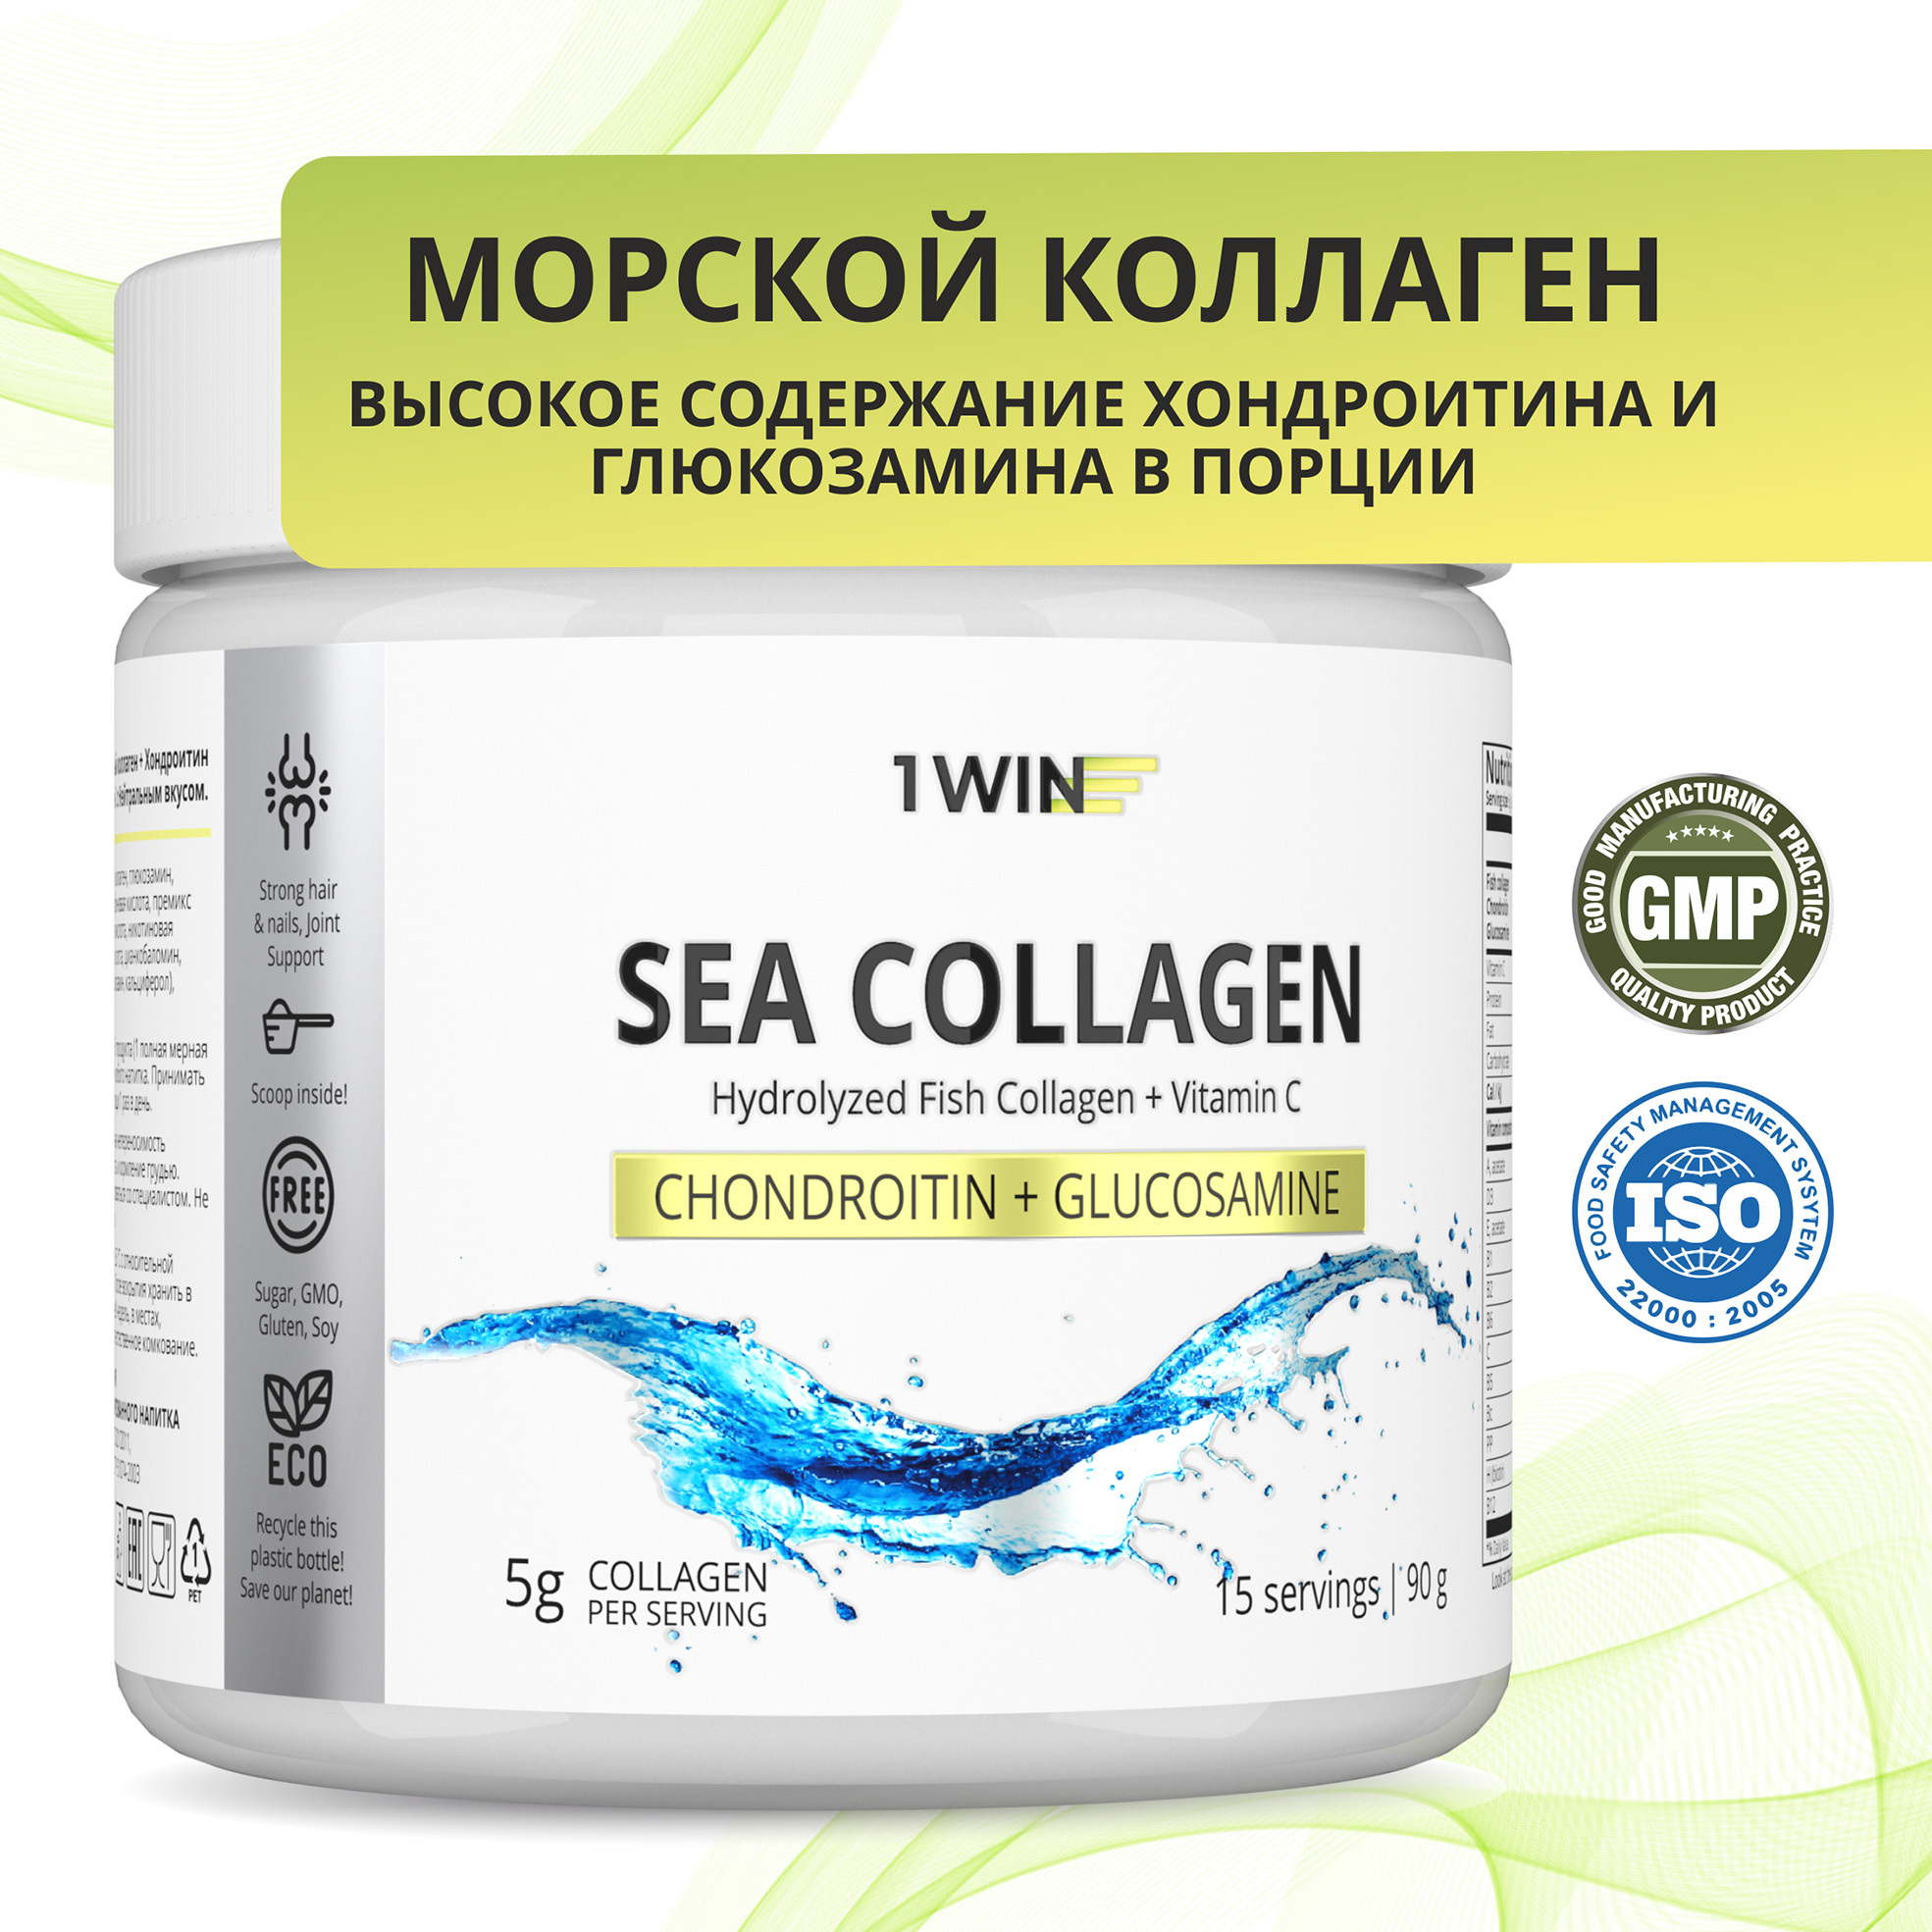 Морской коллаген отзывы покупателей. 1win Collagen + Glucosamine + Chondroitin порошок. Коллаген в порошке рыбий. Морской коллаген. Морской (рыбный) коллаген.